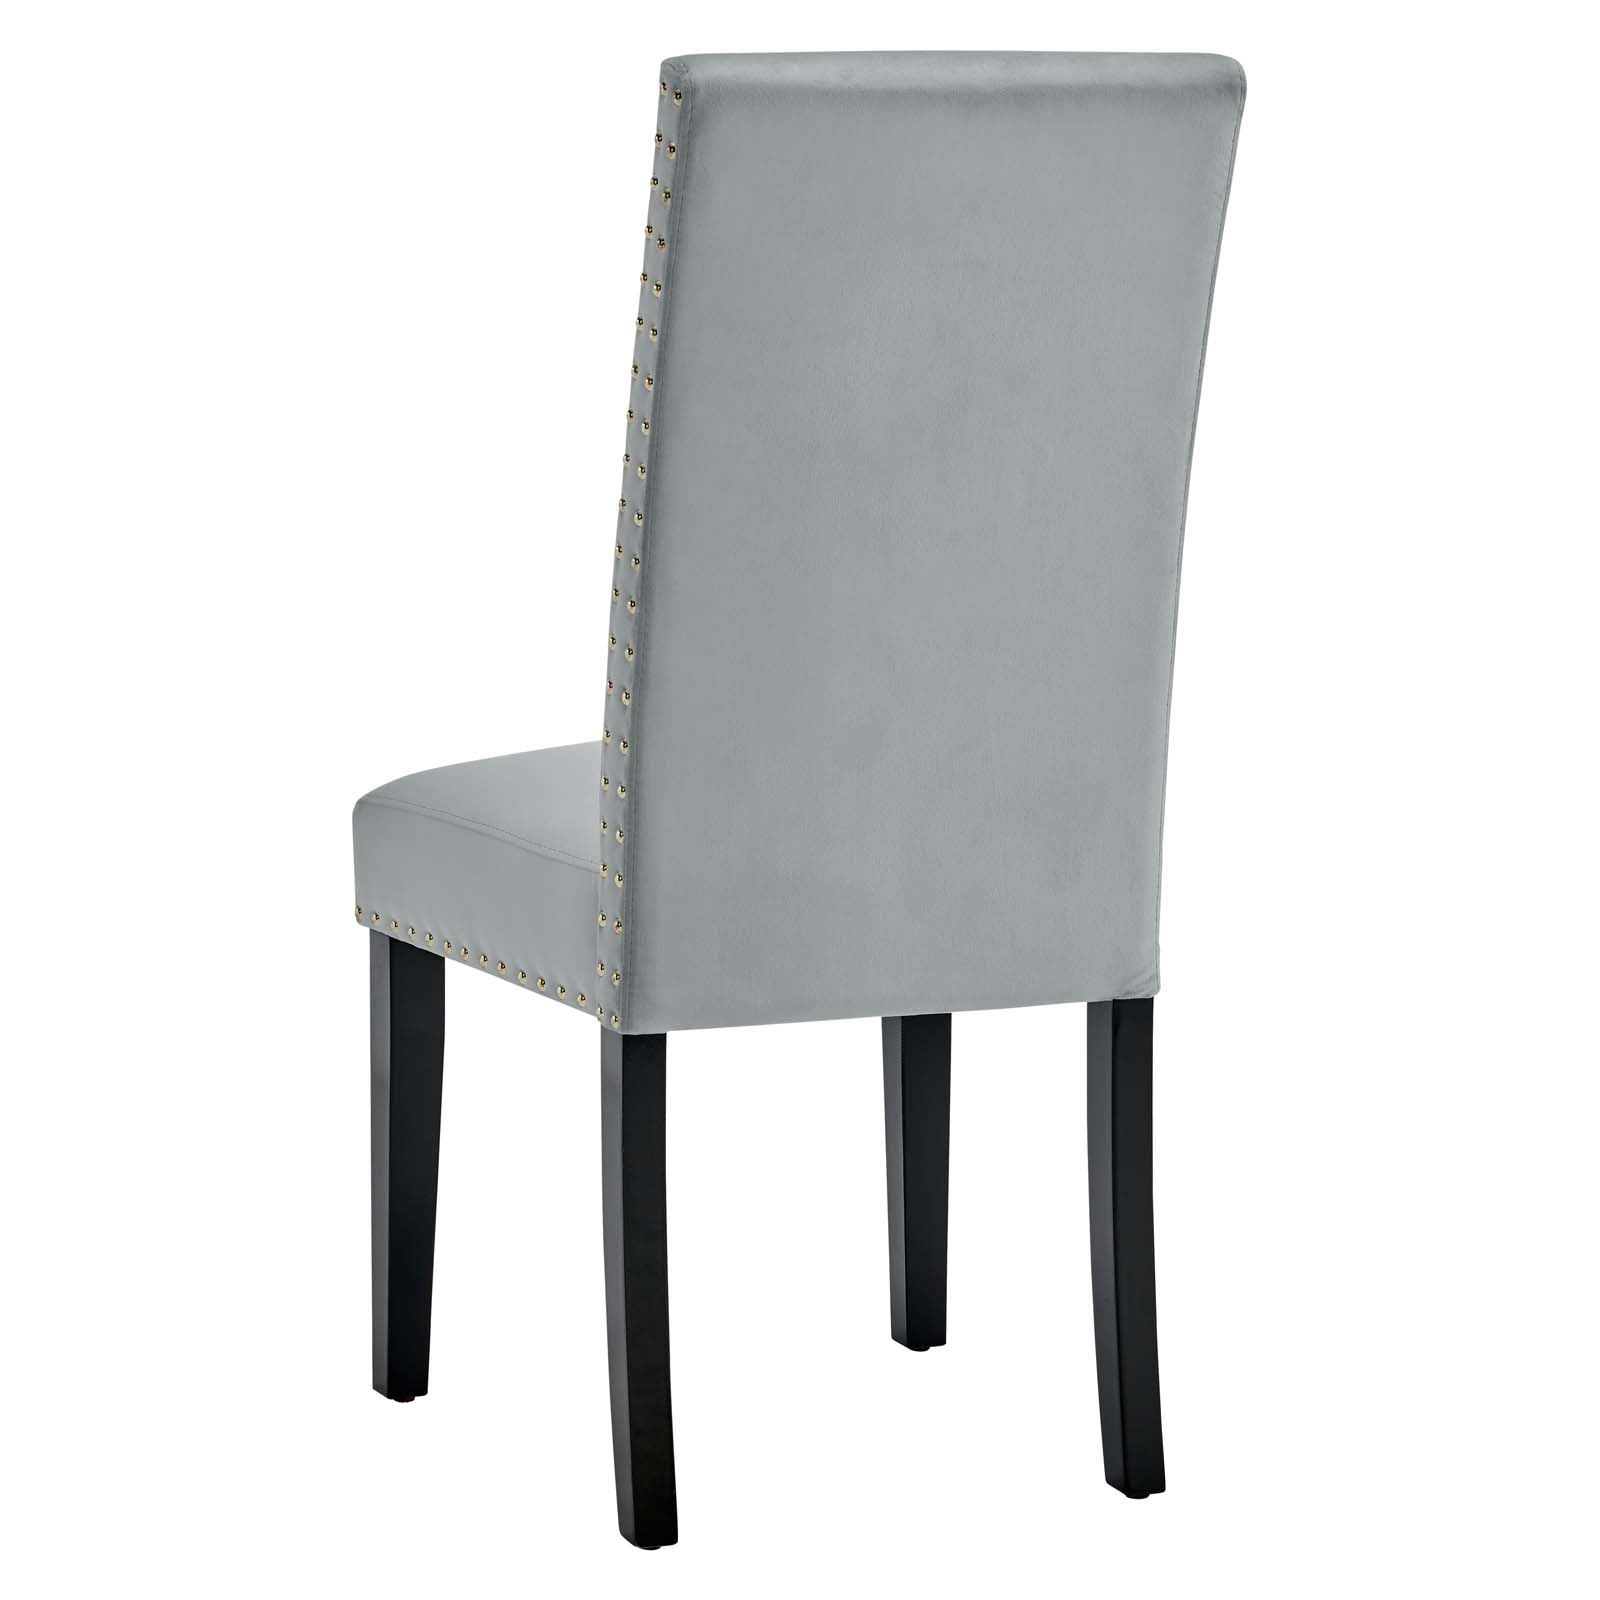 Parcel Performance Velvet Dining Side Chairs - Set of 2 - East Shore Modern Home Furnishings